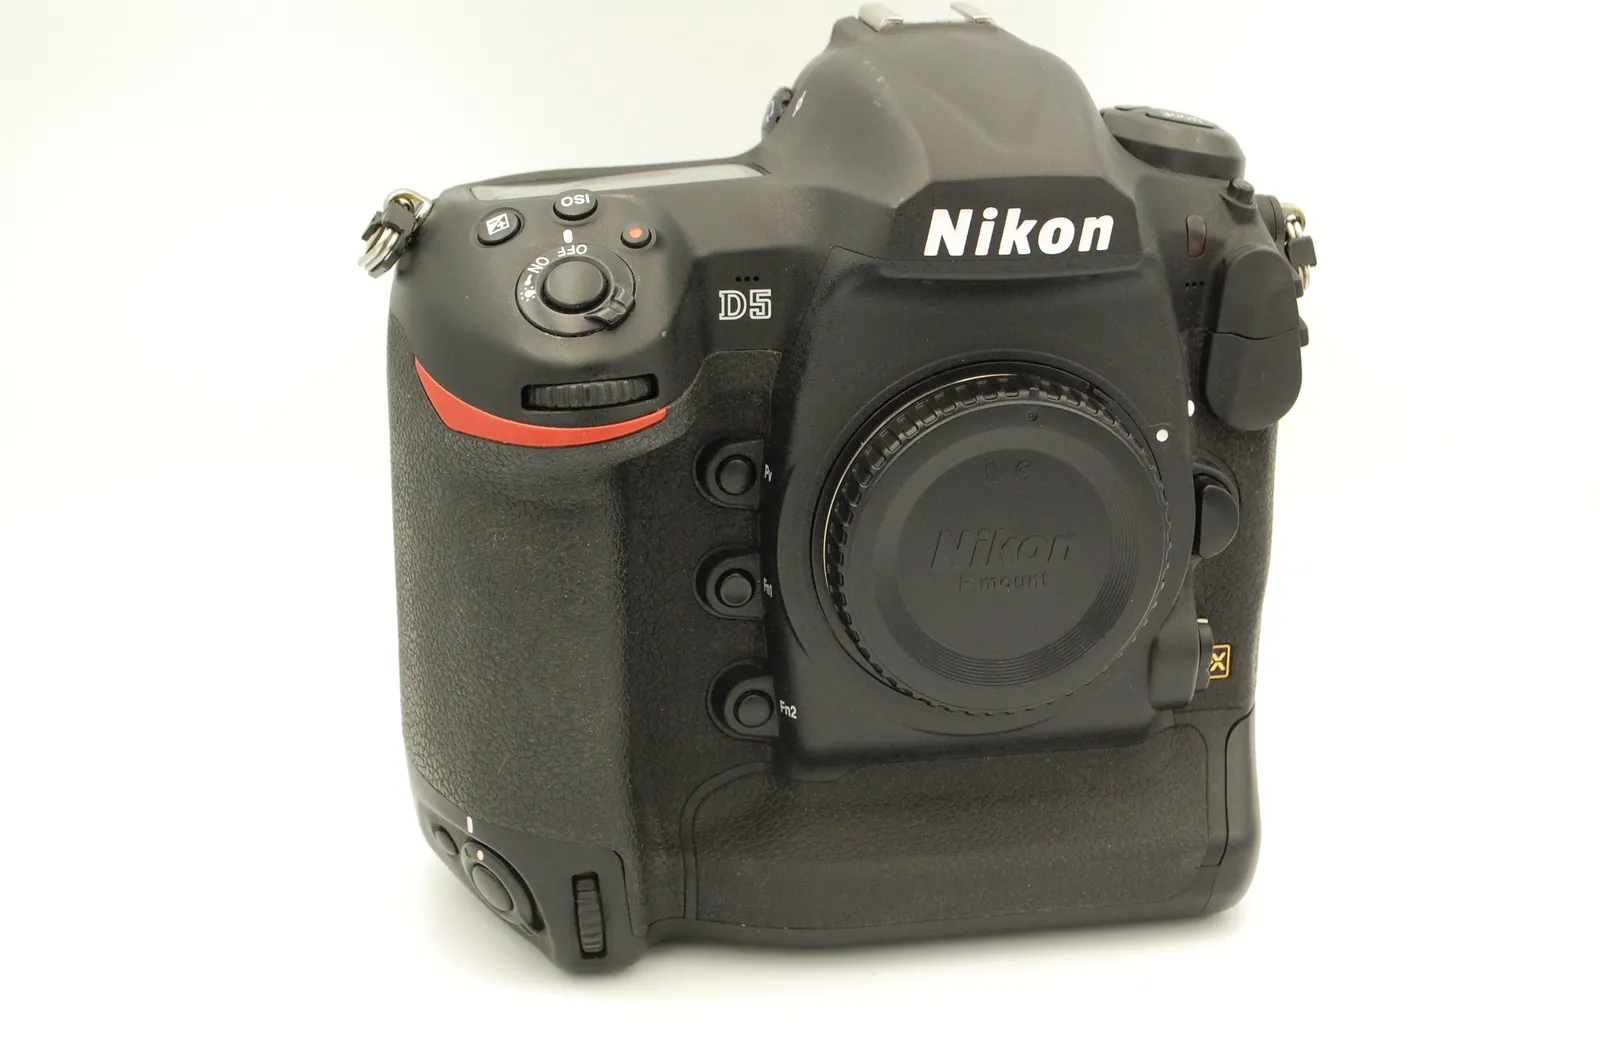 Nikon D5 (XQD Version) 20 MP Digital SLR Camera Body From The 